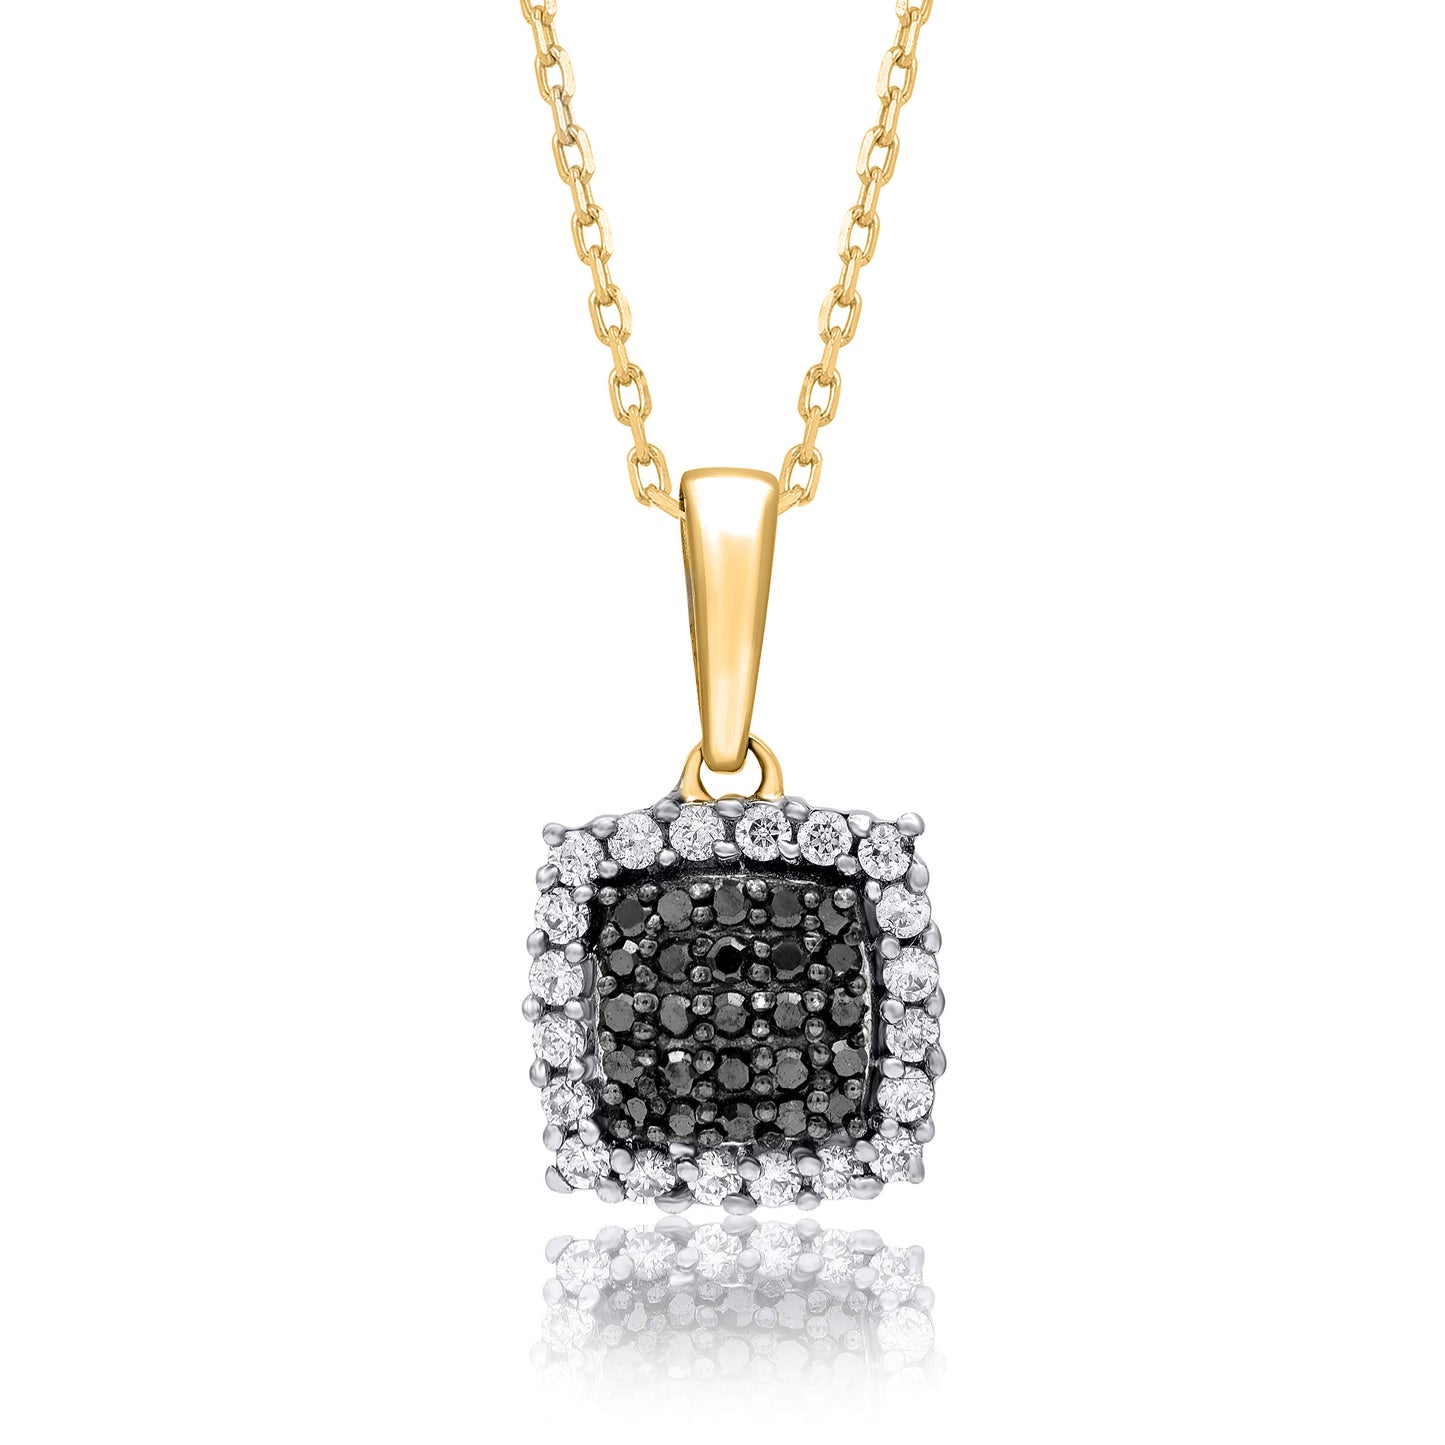 Treated Black Diamond Square Pendant Necklace in 10K Gold